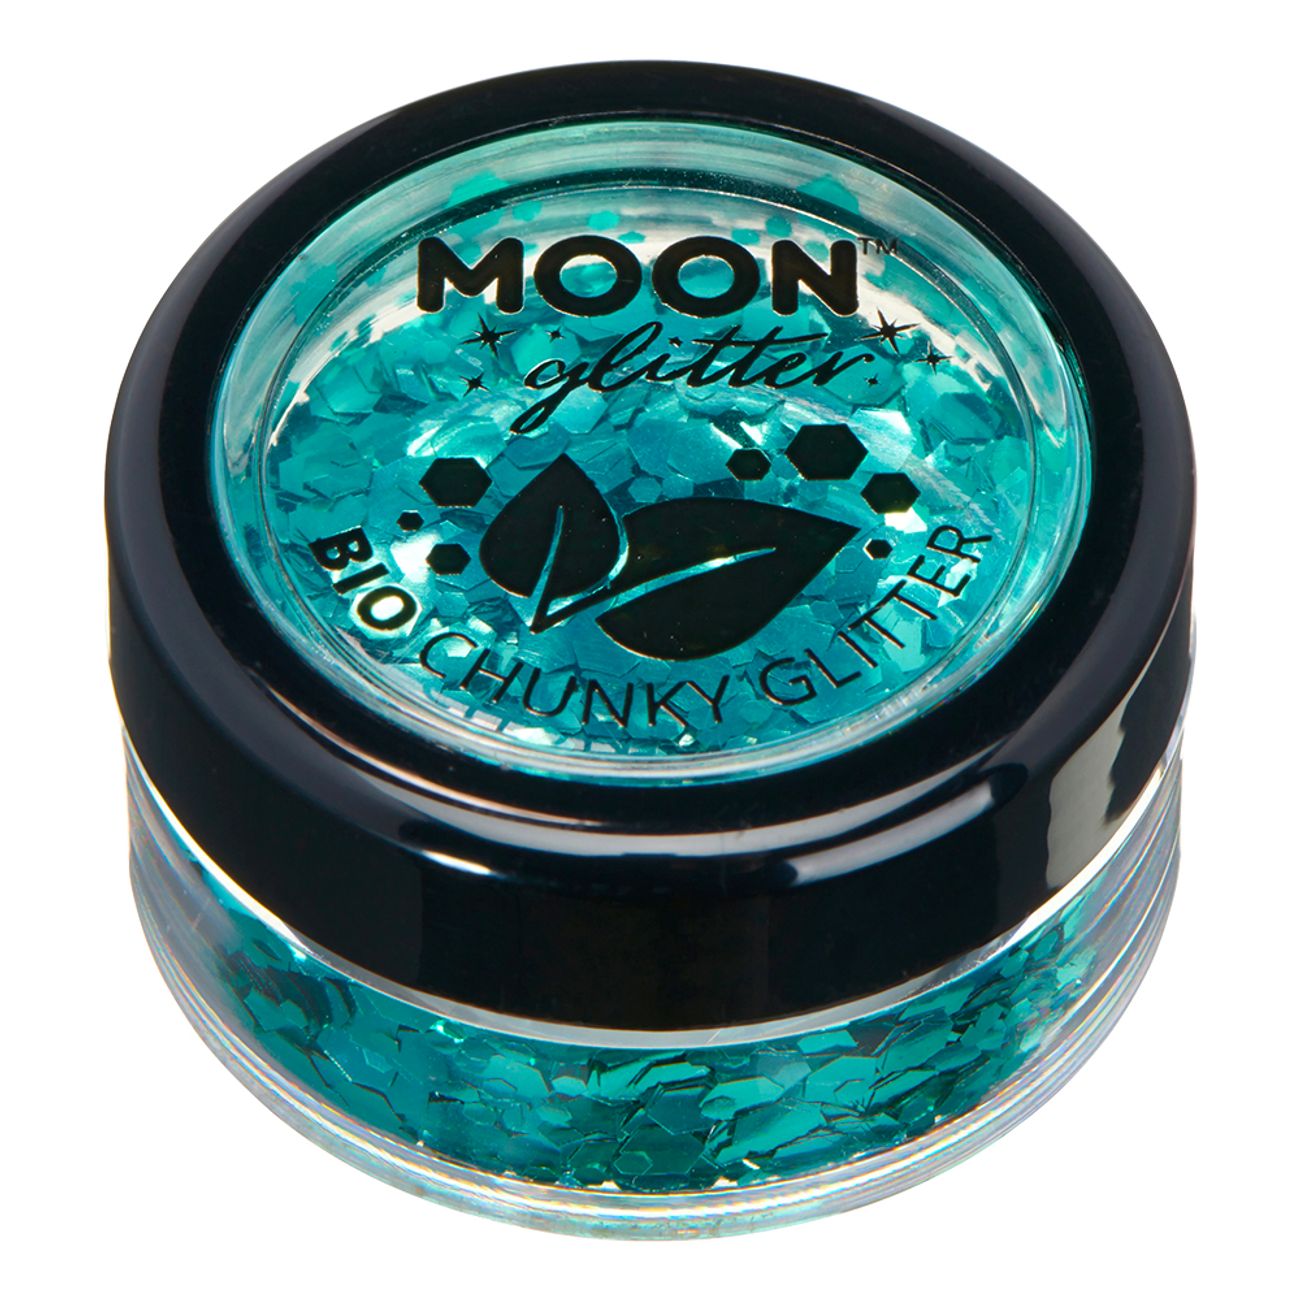 moon-creations-bio-chunky-glitter-79728-6